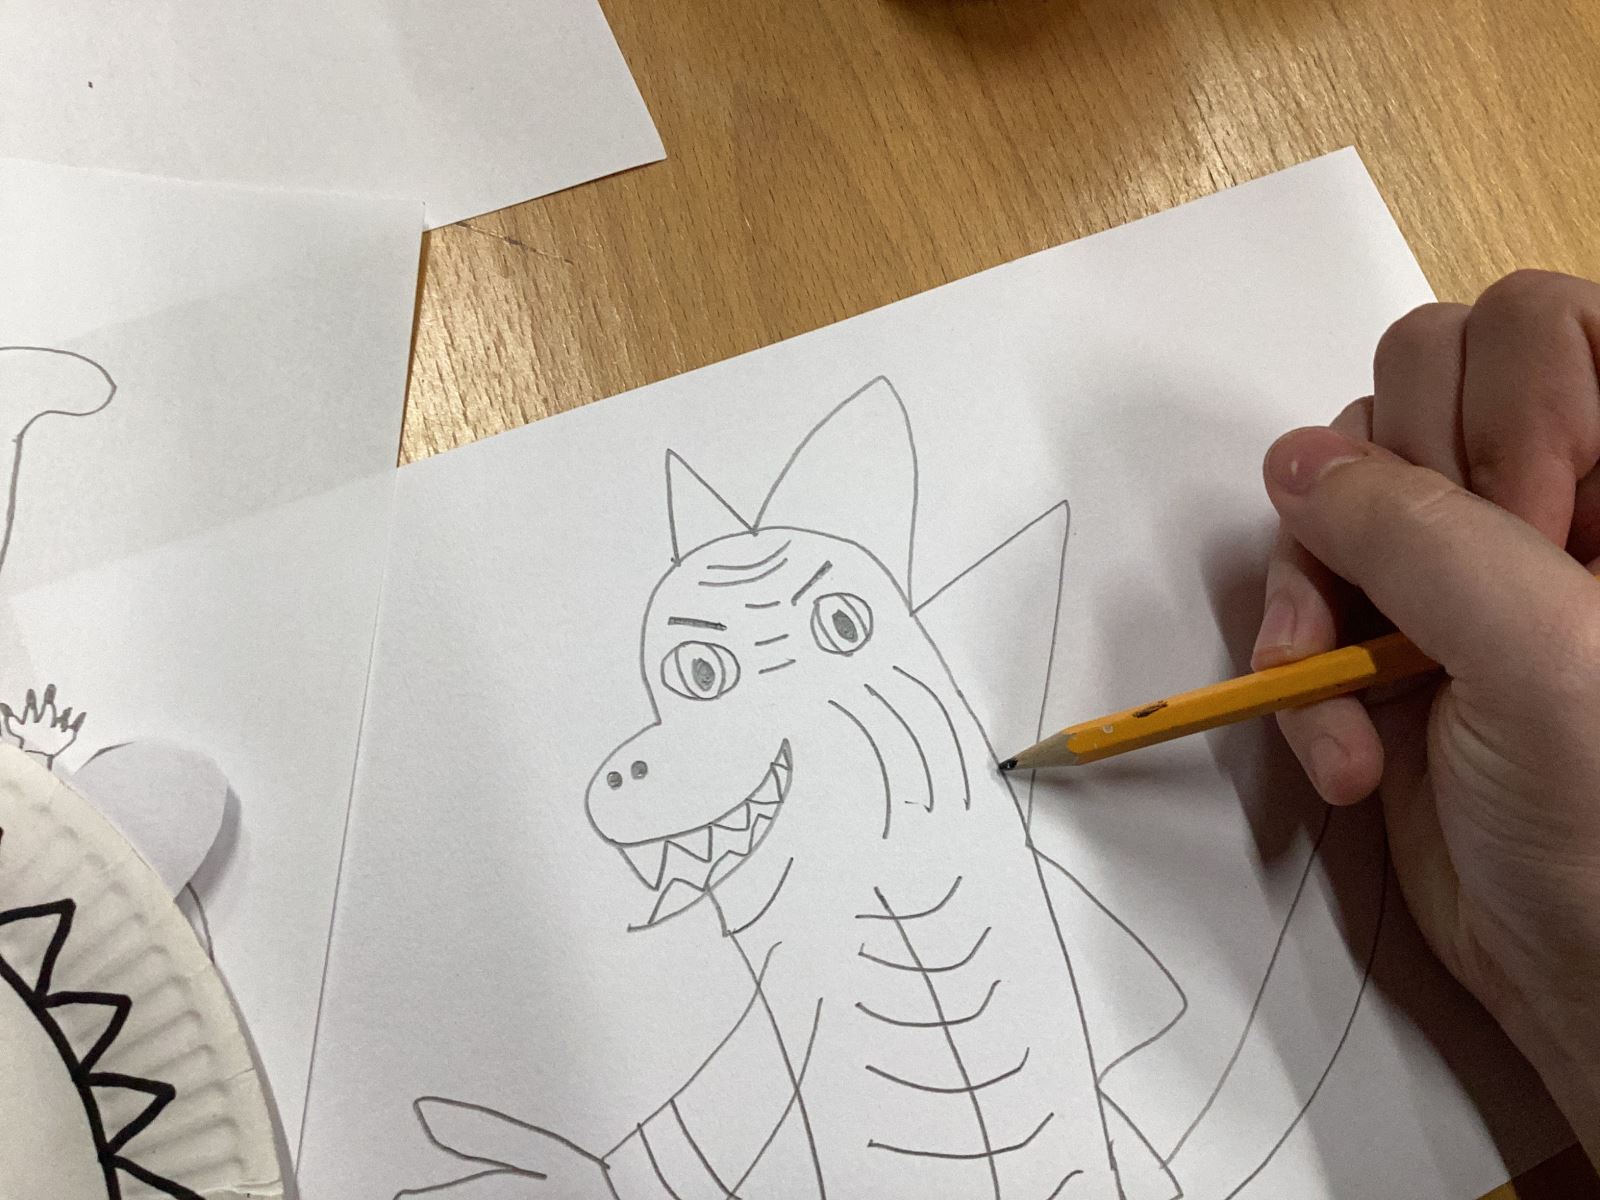 A person drawing a dragon looking dinosaur